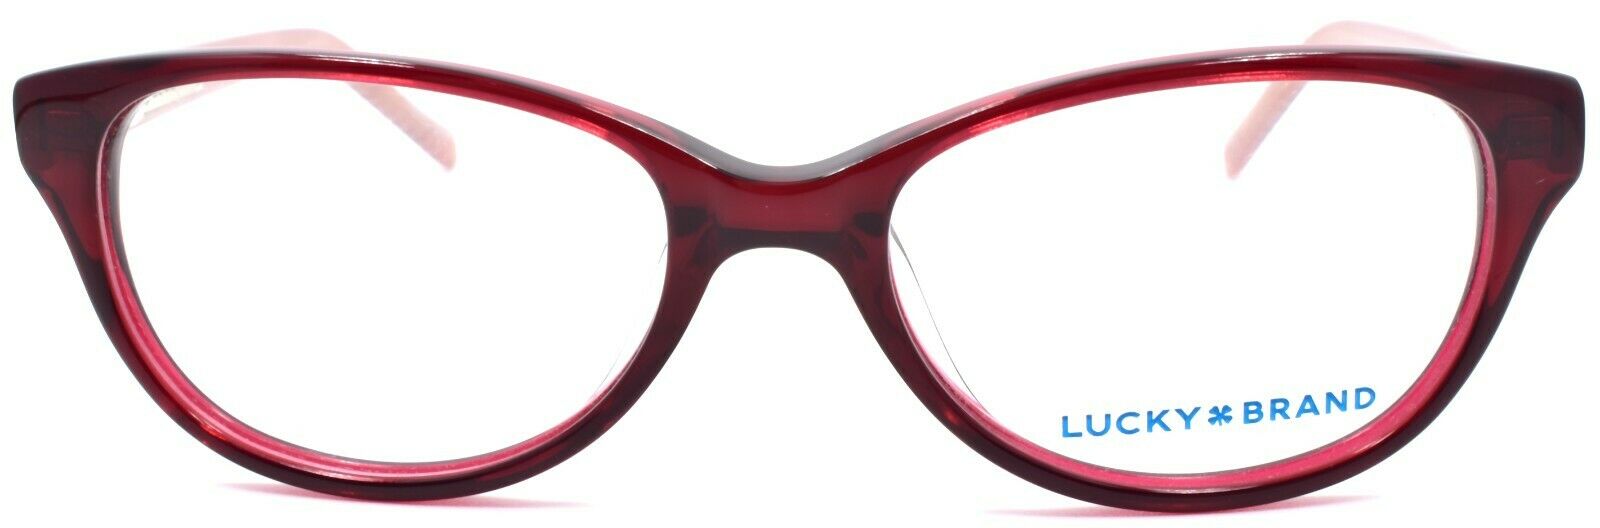 2-LUCKY BRAND D701 Kids Girls Eyeglasses Frames 46-15-125 Burgundy-751286282054-IKSpecs